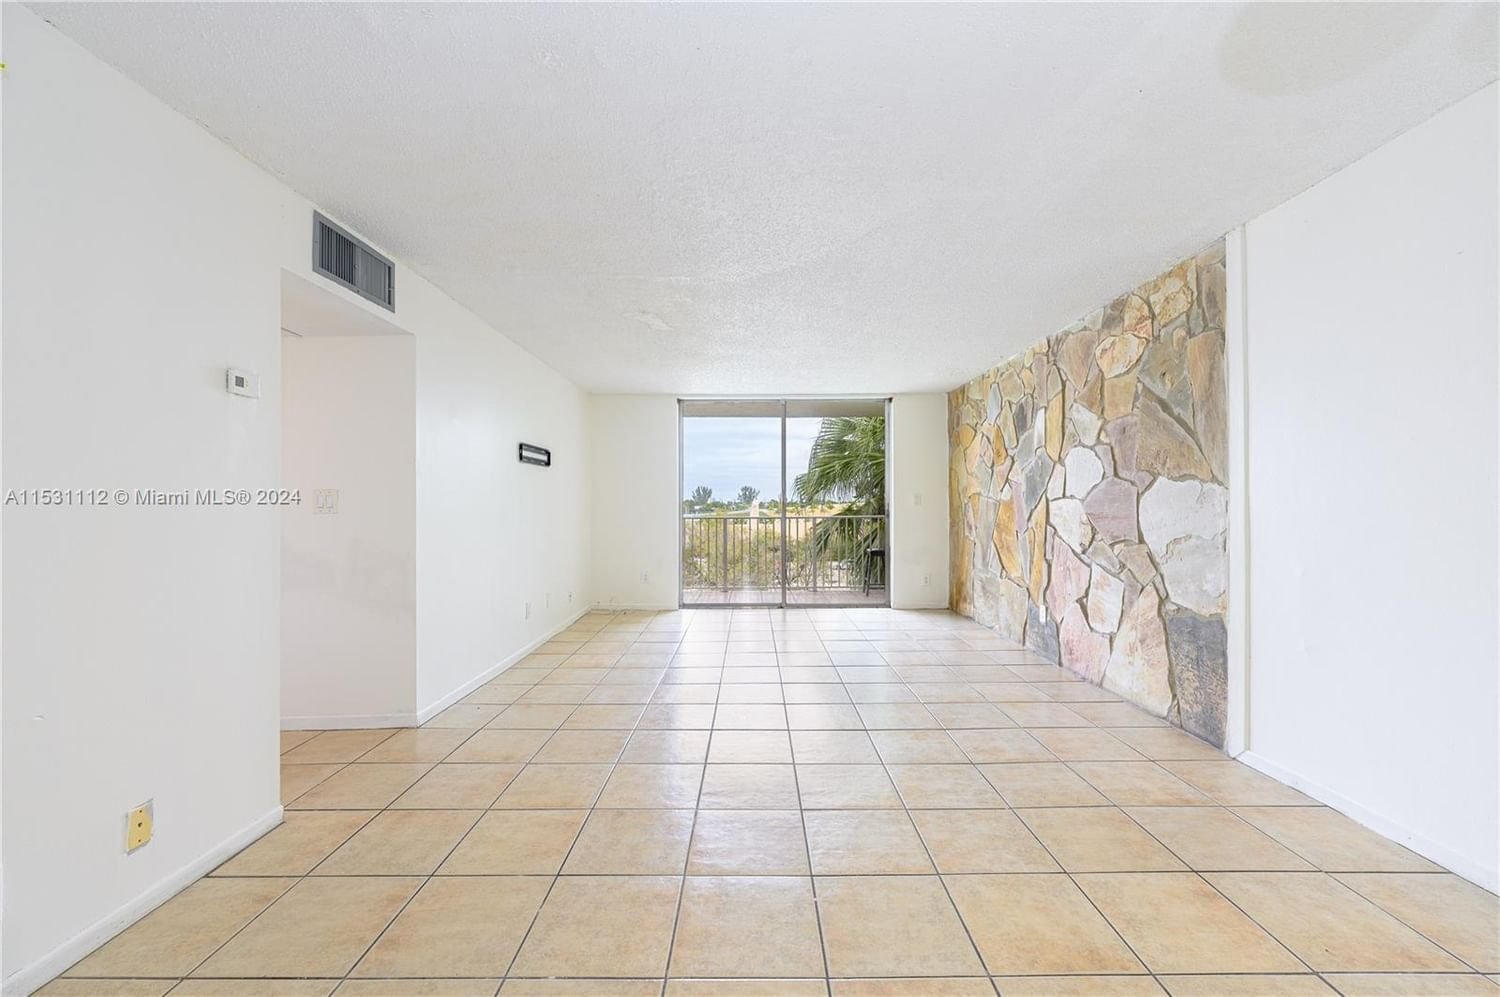 Real estate property located at 8411 8th St #405, Miami-Dade County, SUMMIT CHASE CONDO, Miami, FL